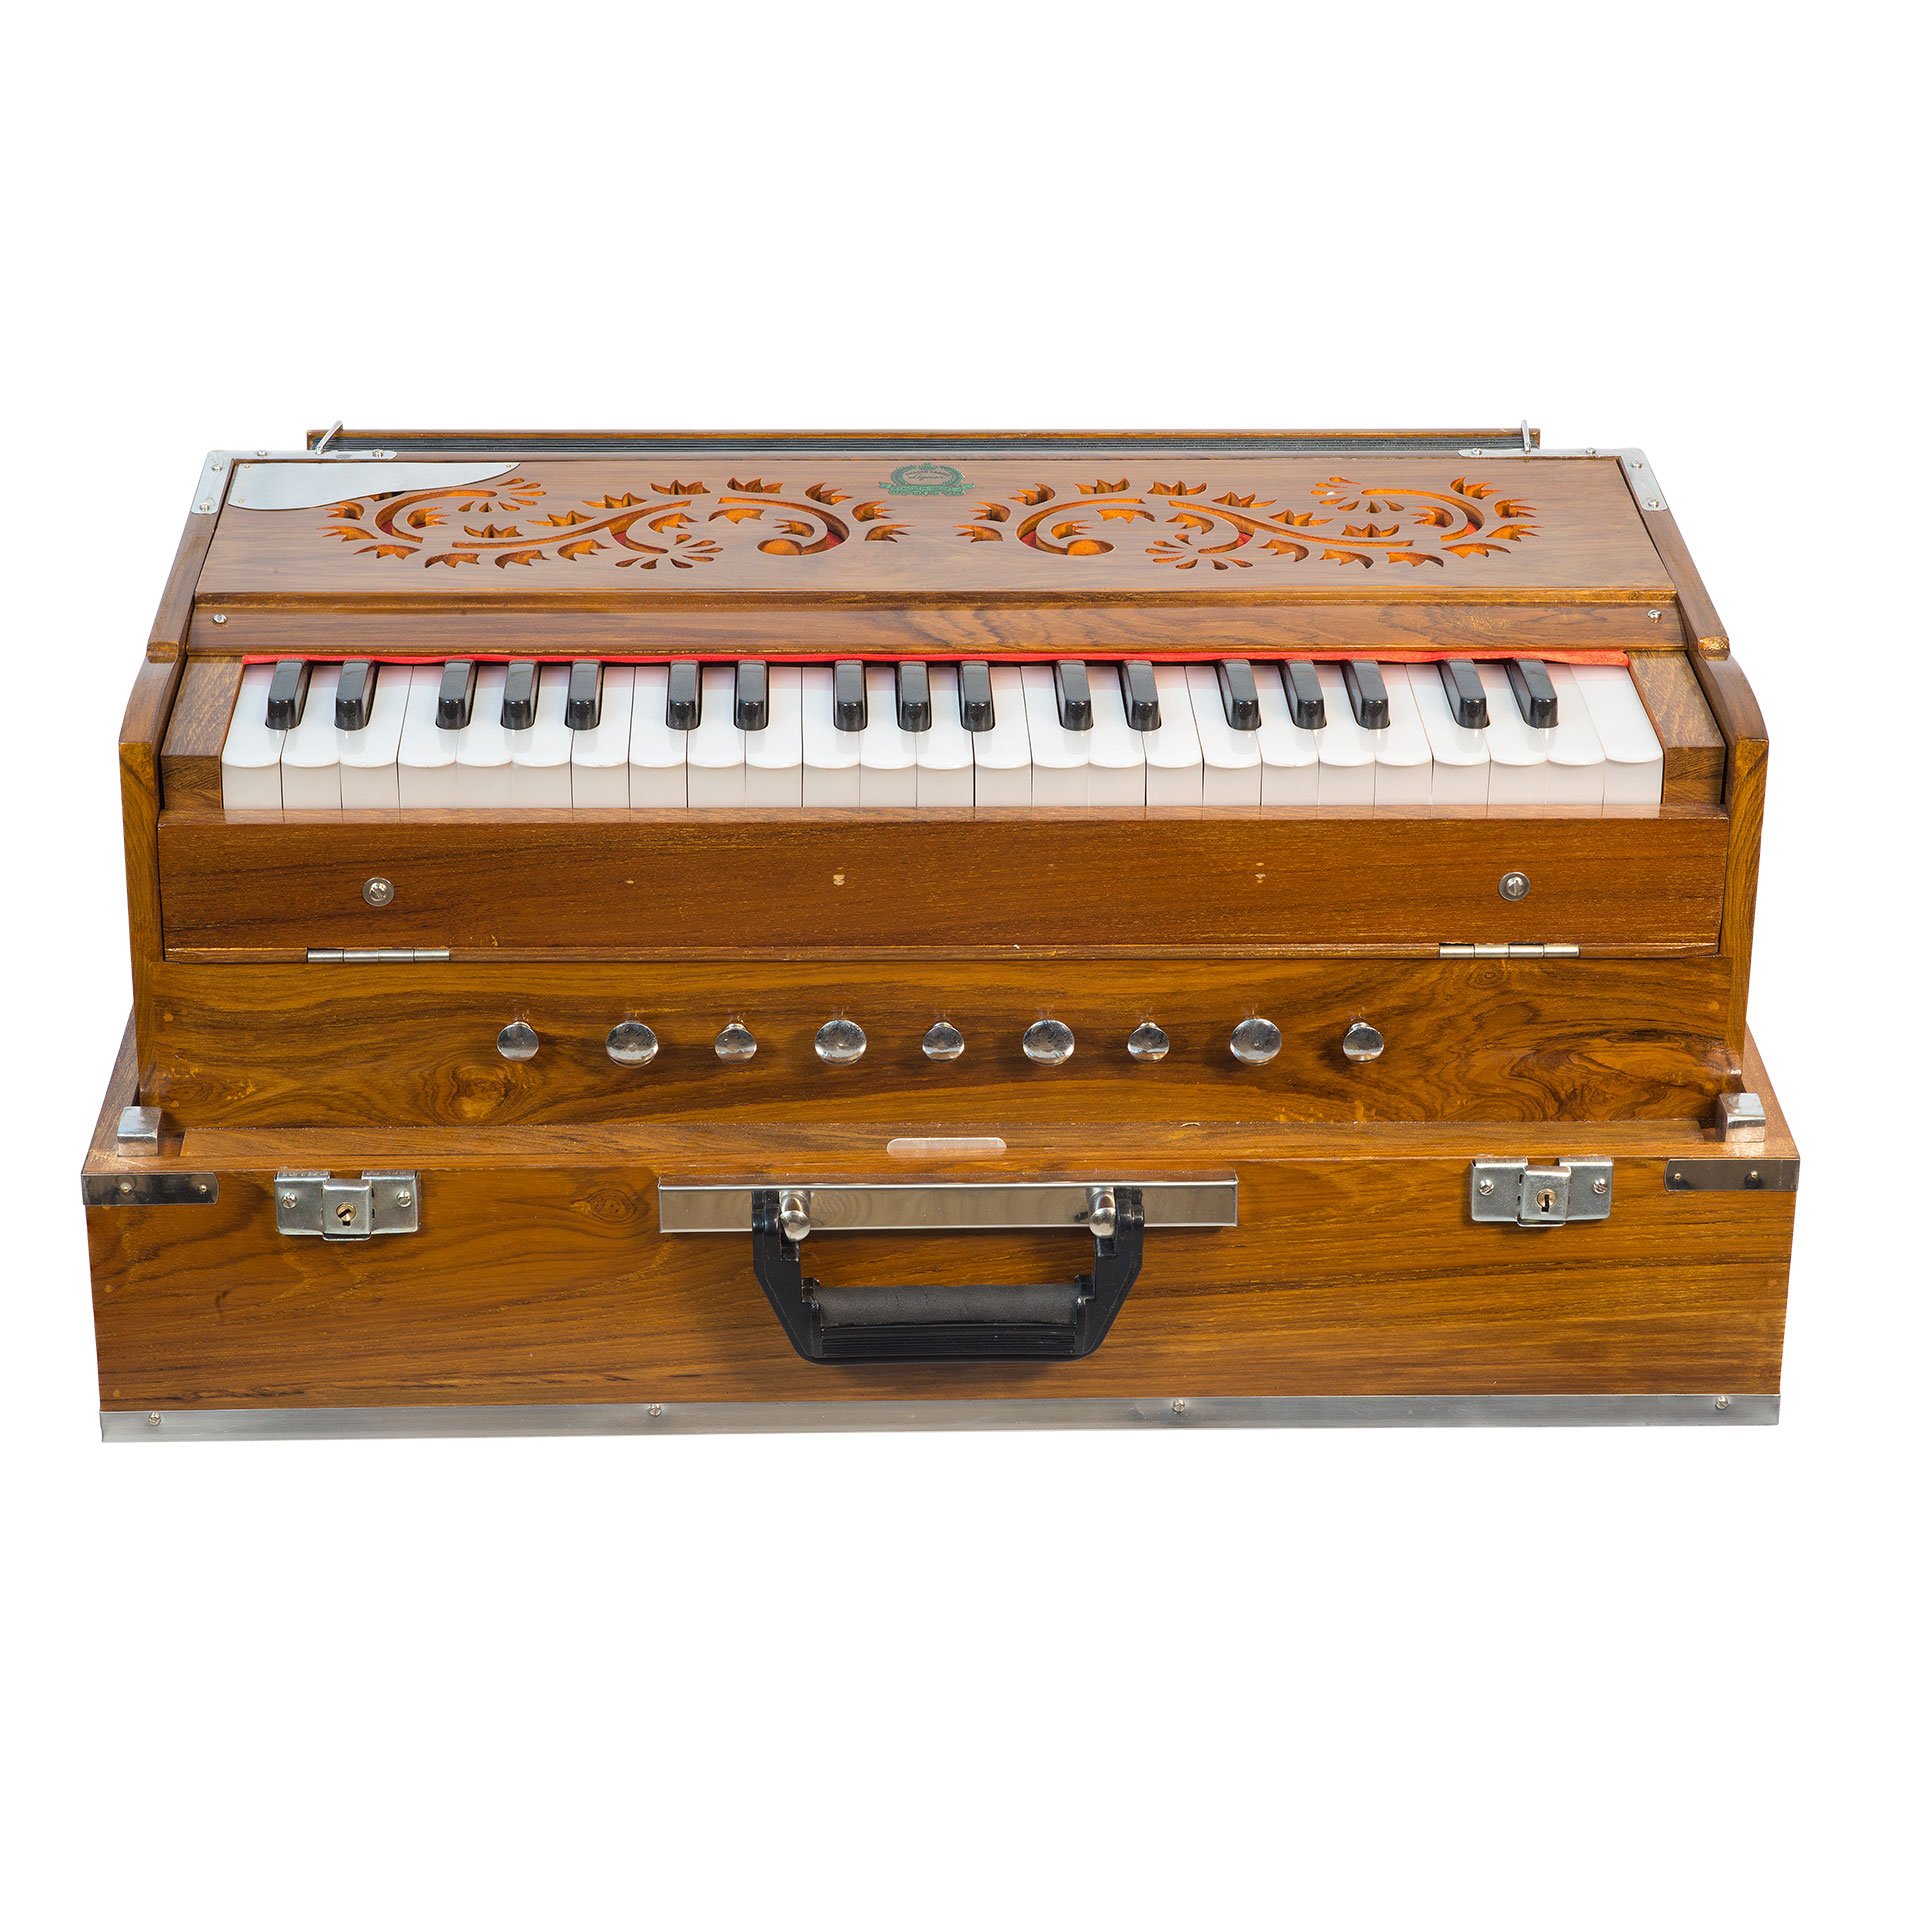 Harmonium 42 keys 440Hz Box